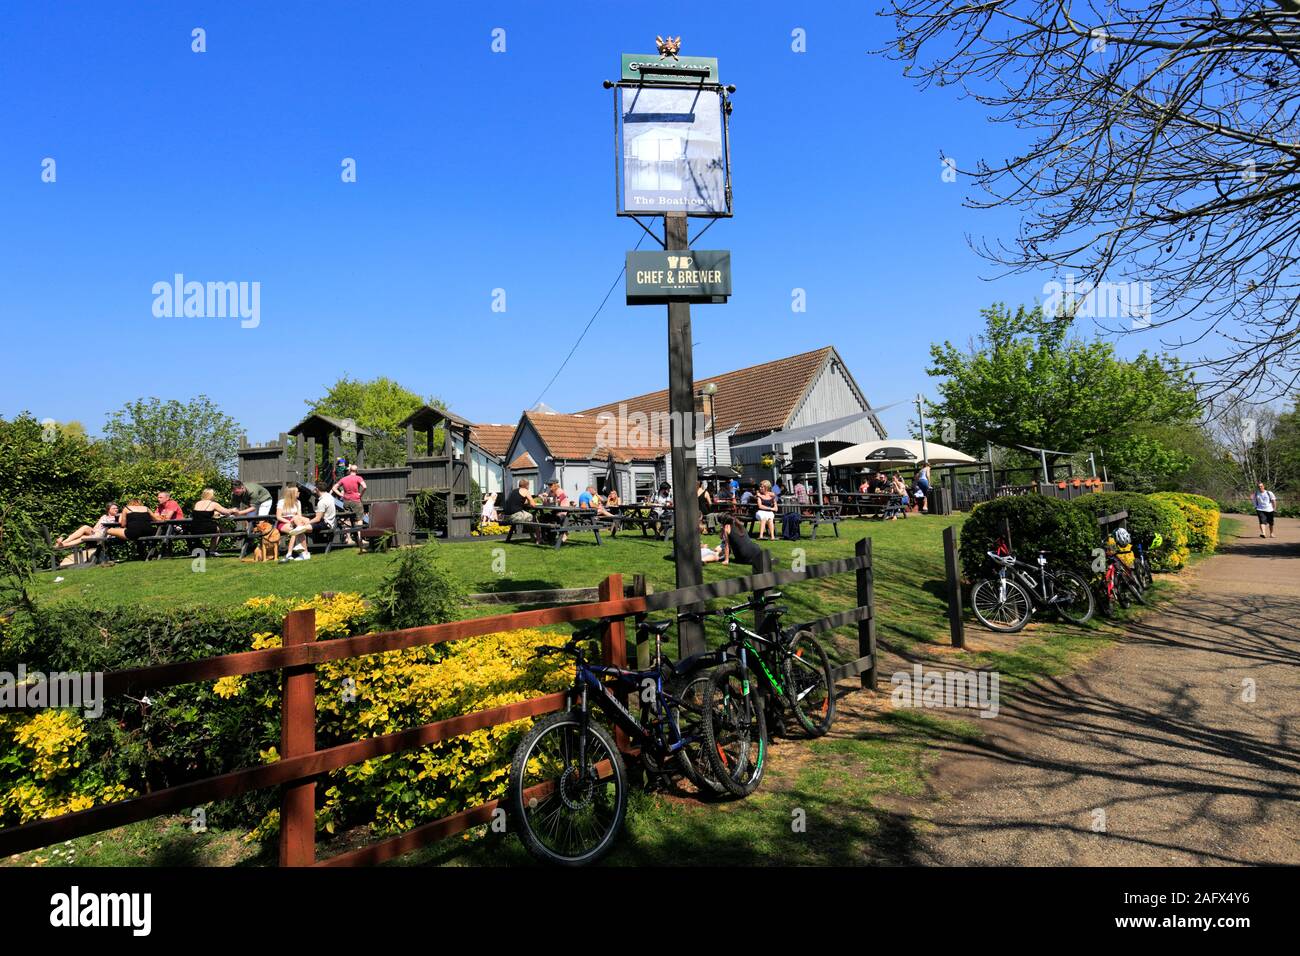 Le Boathouse pub, Thorpe Meadows, Peterborough, Cambridgeshire, Angleterre, RU Banque D'Images